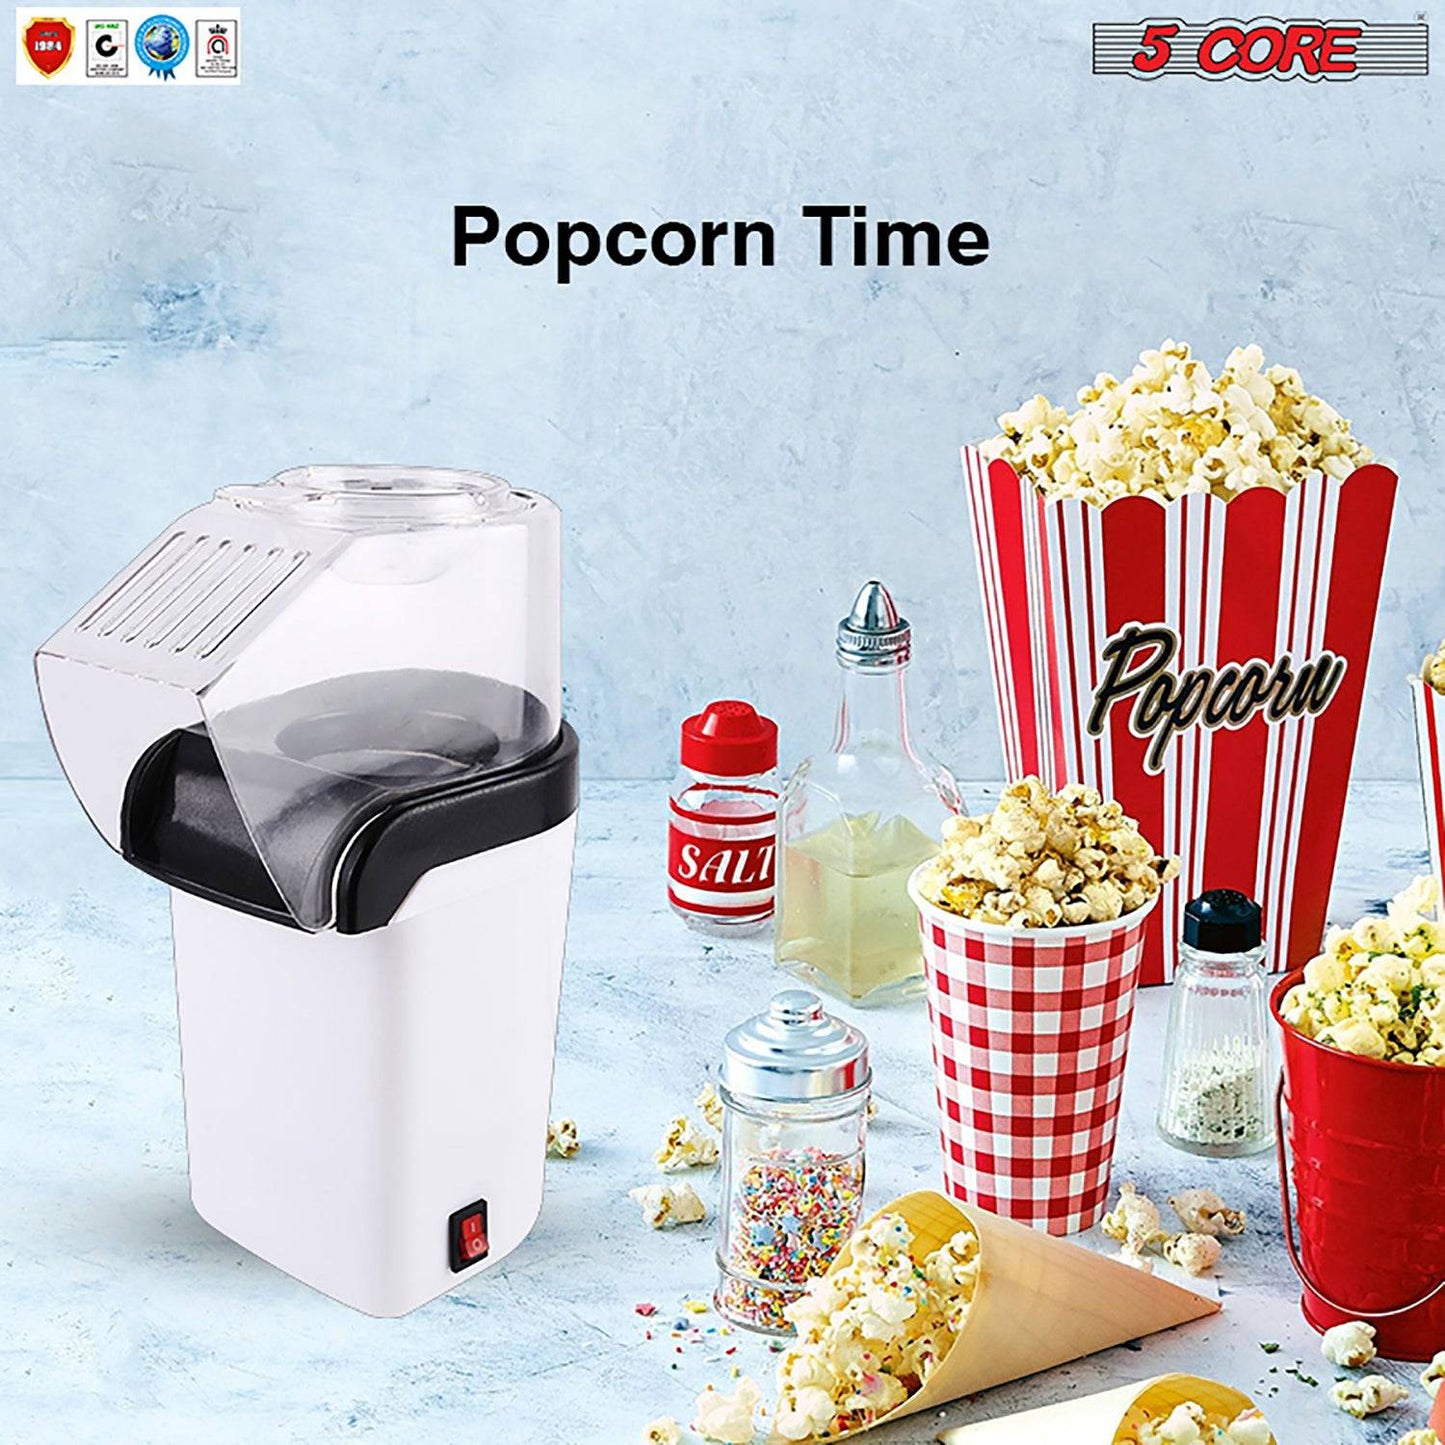 5Core Popcorn Machine Hot Air Electric Popper Kernel Corn Maker Bpa Free No Oil POP W